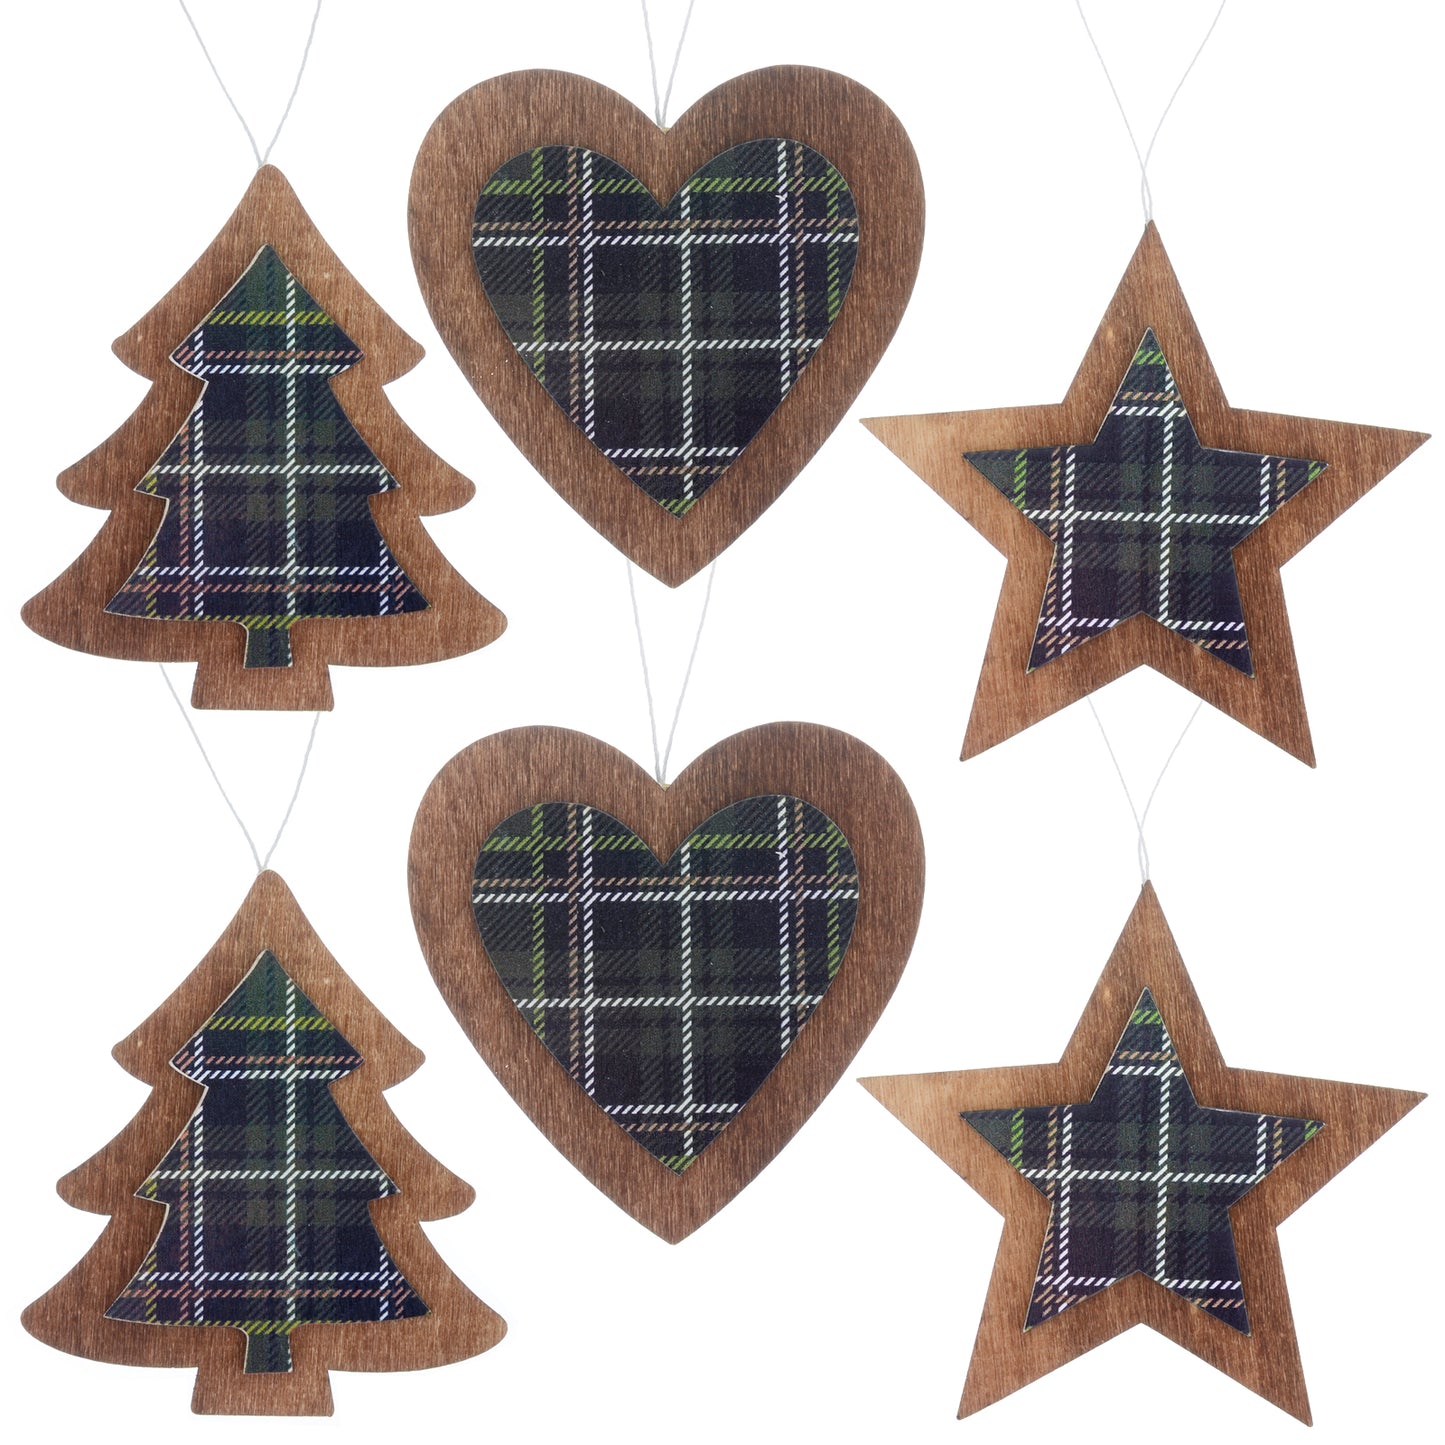 Mr Crimbo 6pk Tartan Wooden Shape Christmas Tree Decorations - MrCrimbo.co.uk -XS5264 - Green -decorations